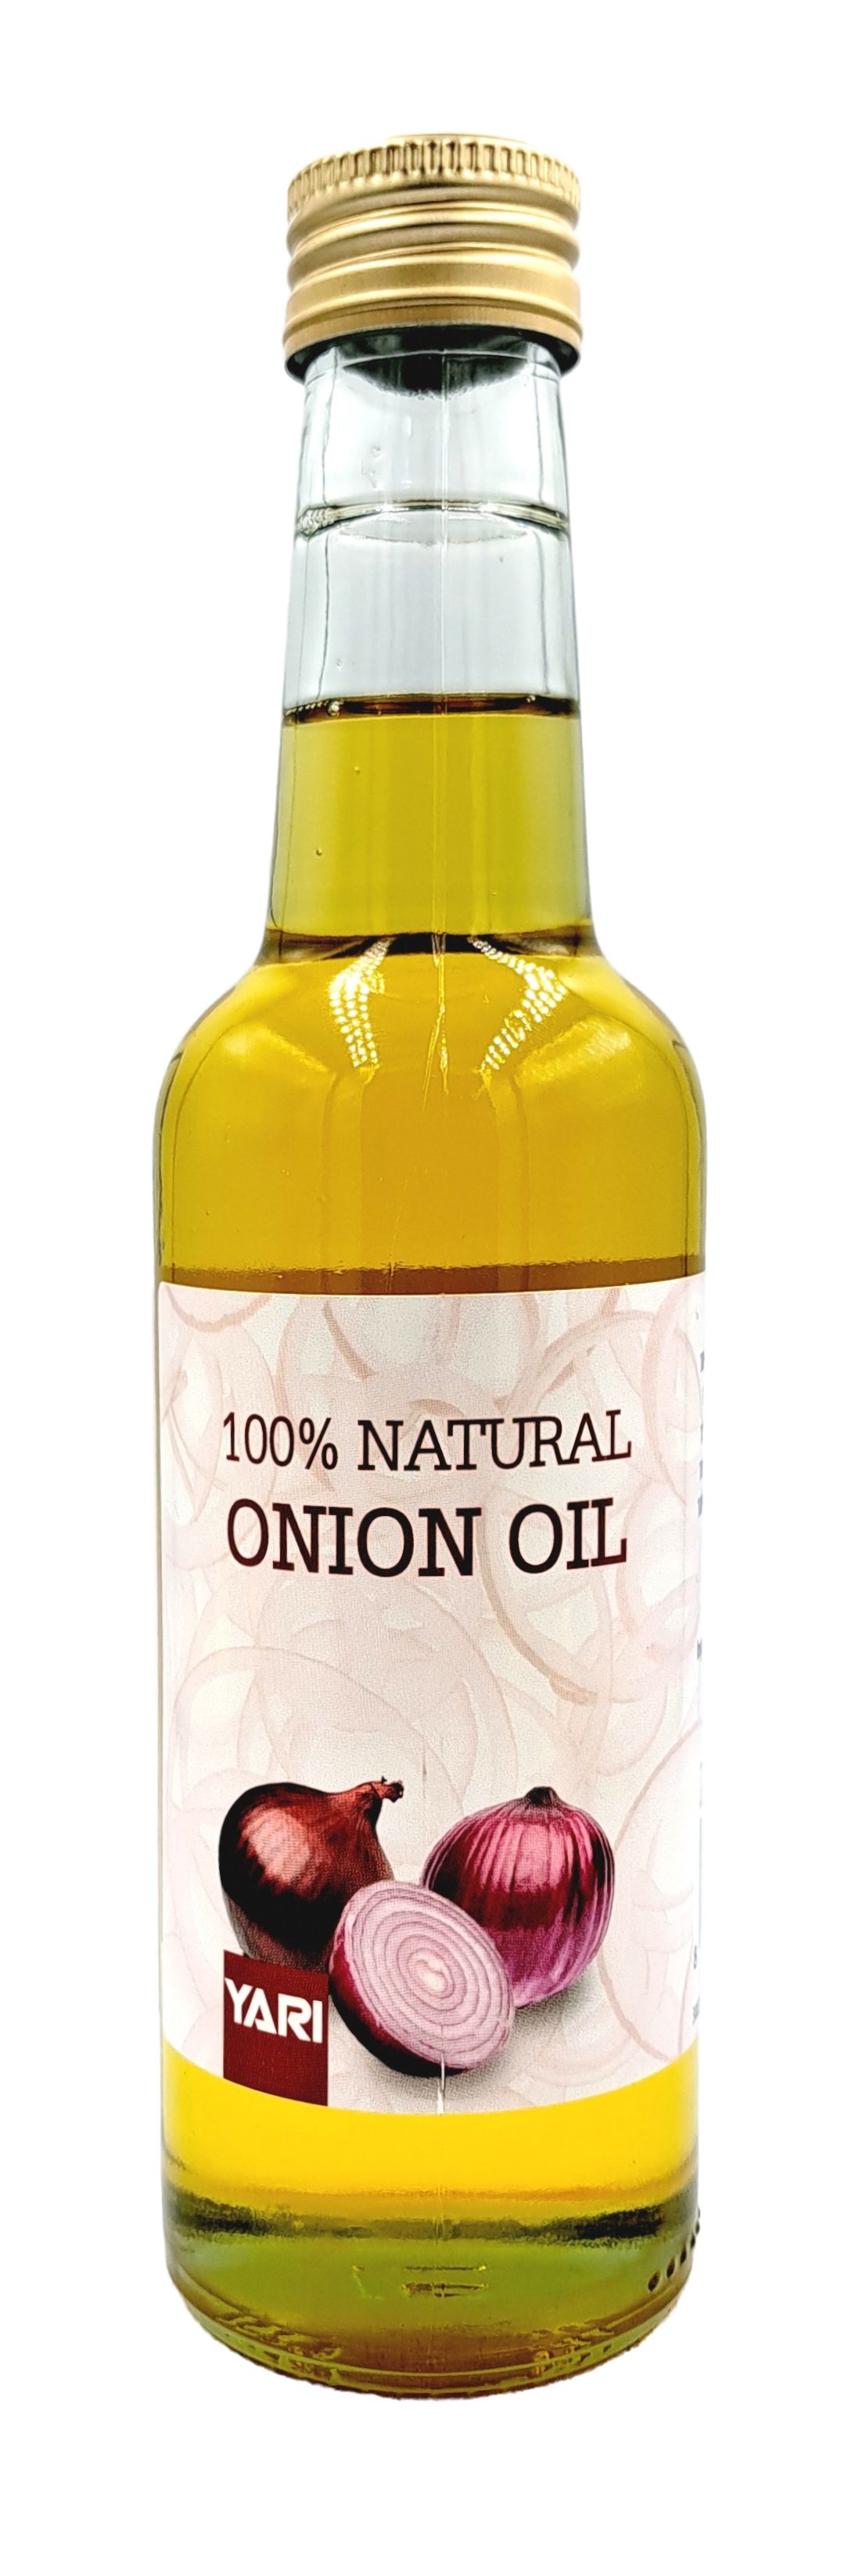 Yari Haaröl Yari 100% Natural Onion Oil - Zwiebelöl 250ml, 1, 1-tlg.